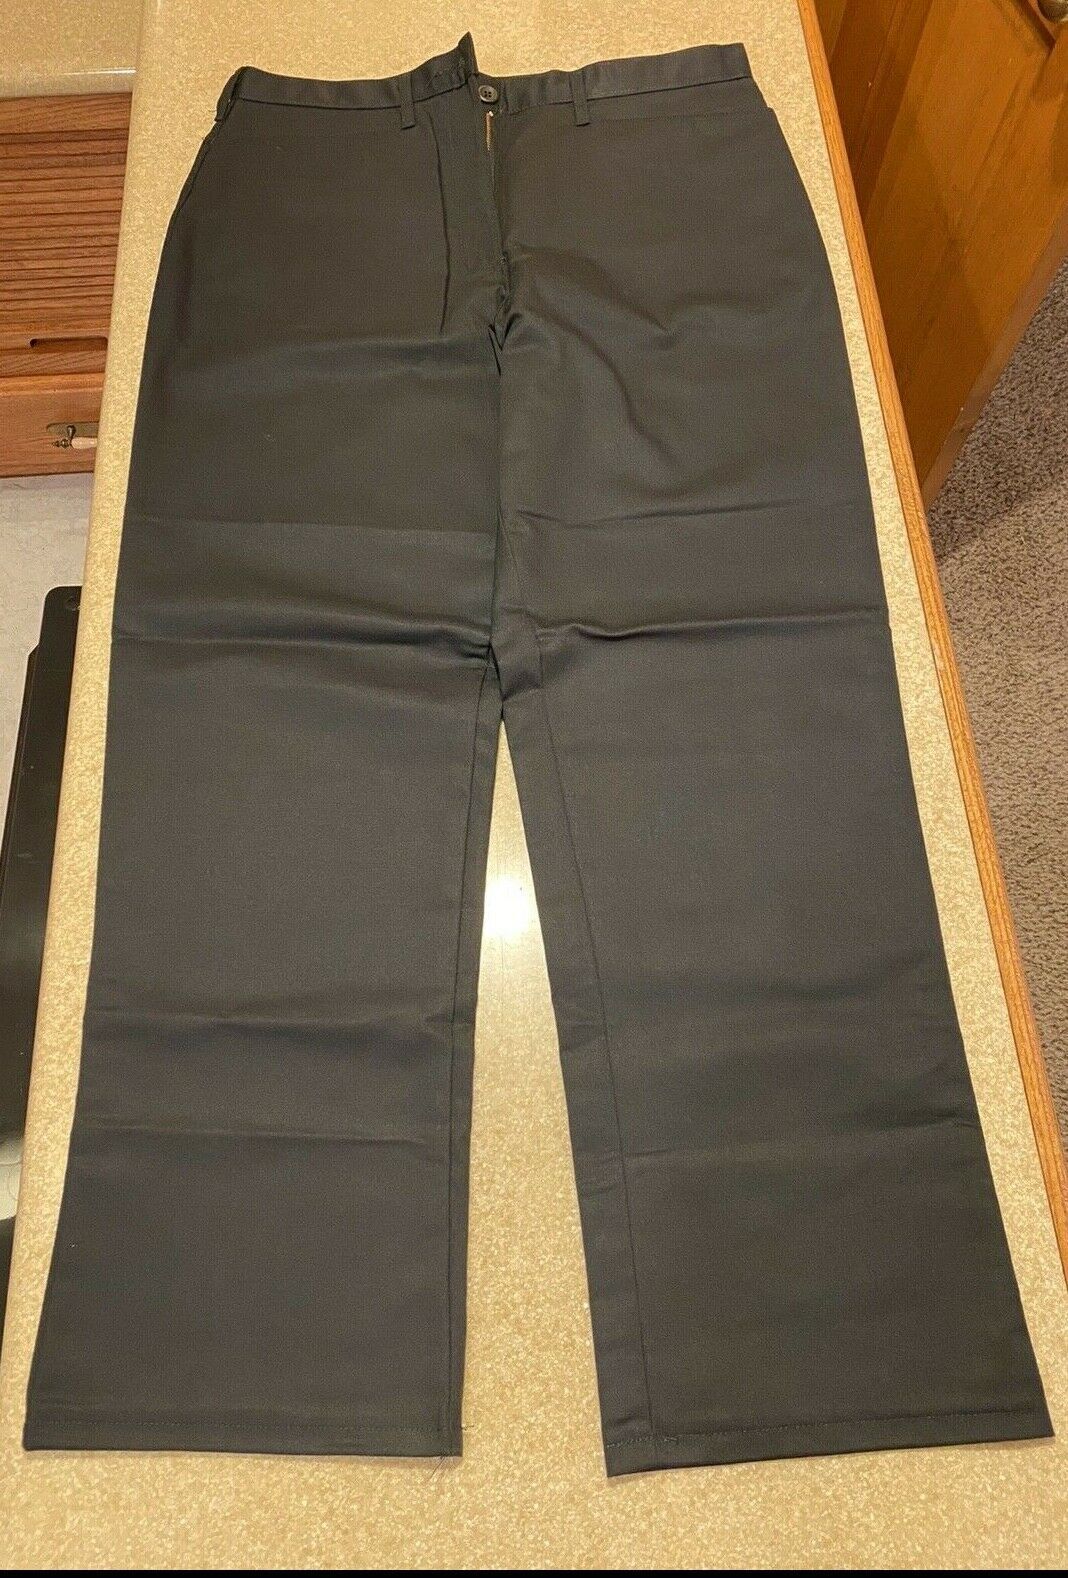 Cintas Womens Work Pants Susan Fit Black Zipper Fly Size 20 SH 390-35